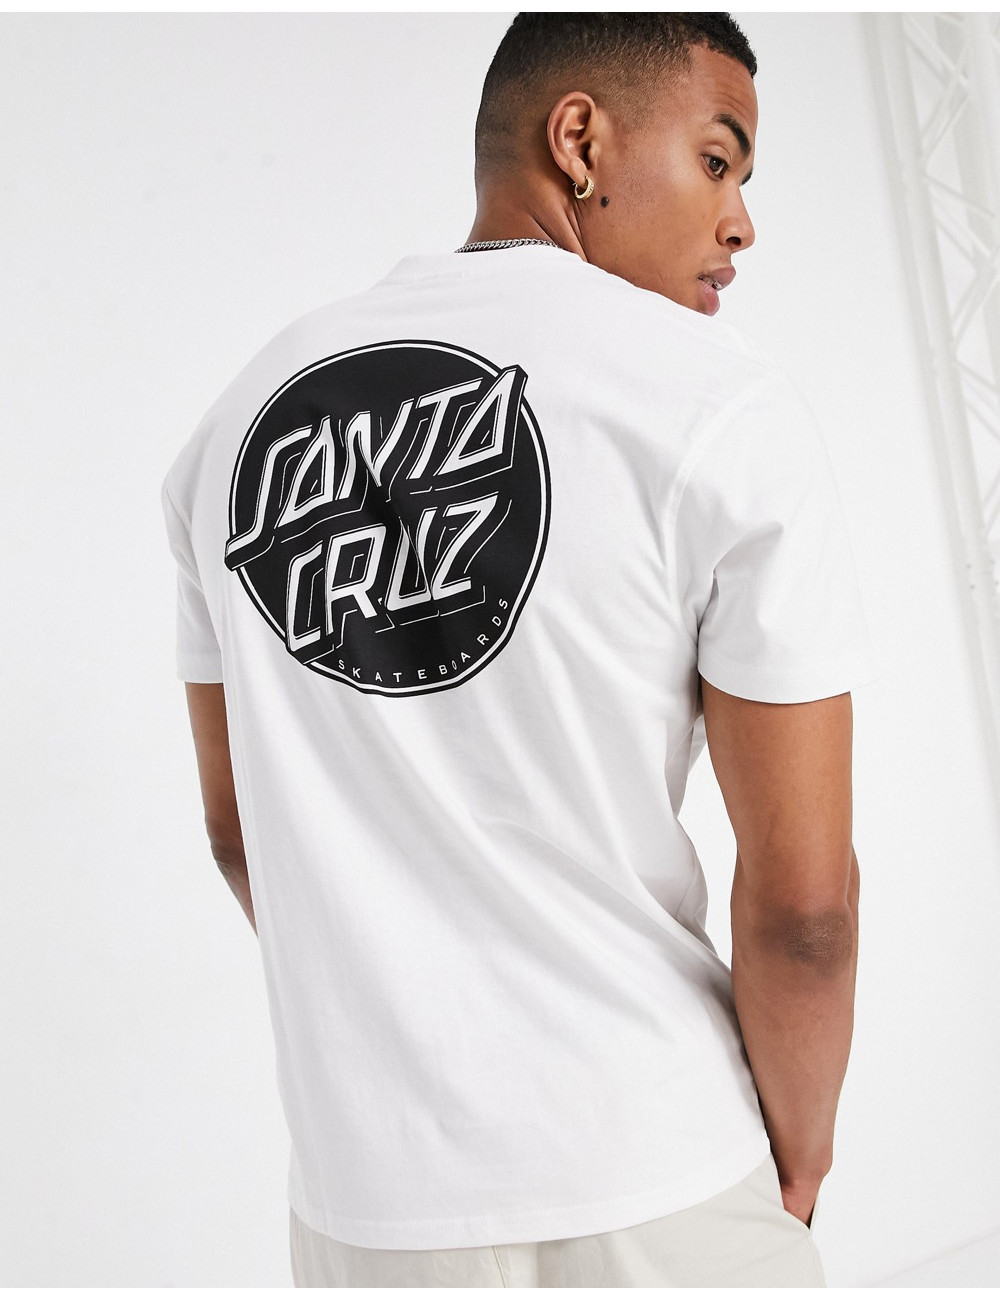 Santa Cruz logo t-shirt in...